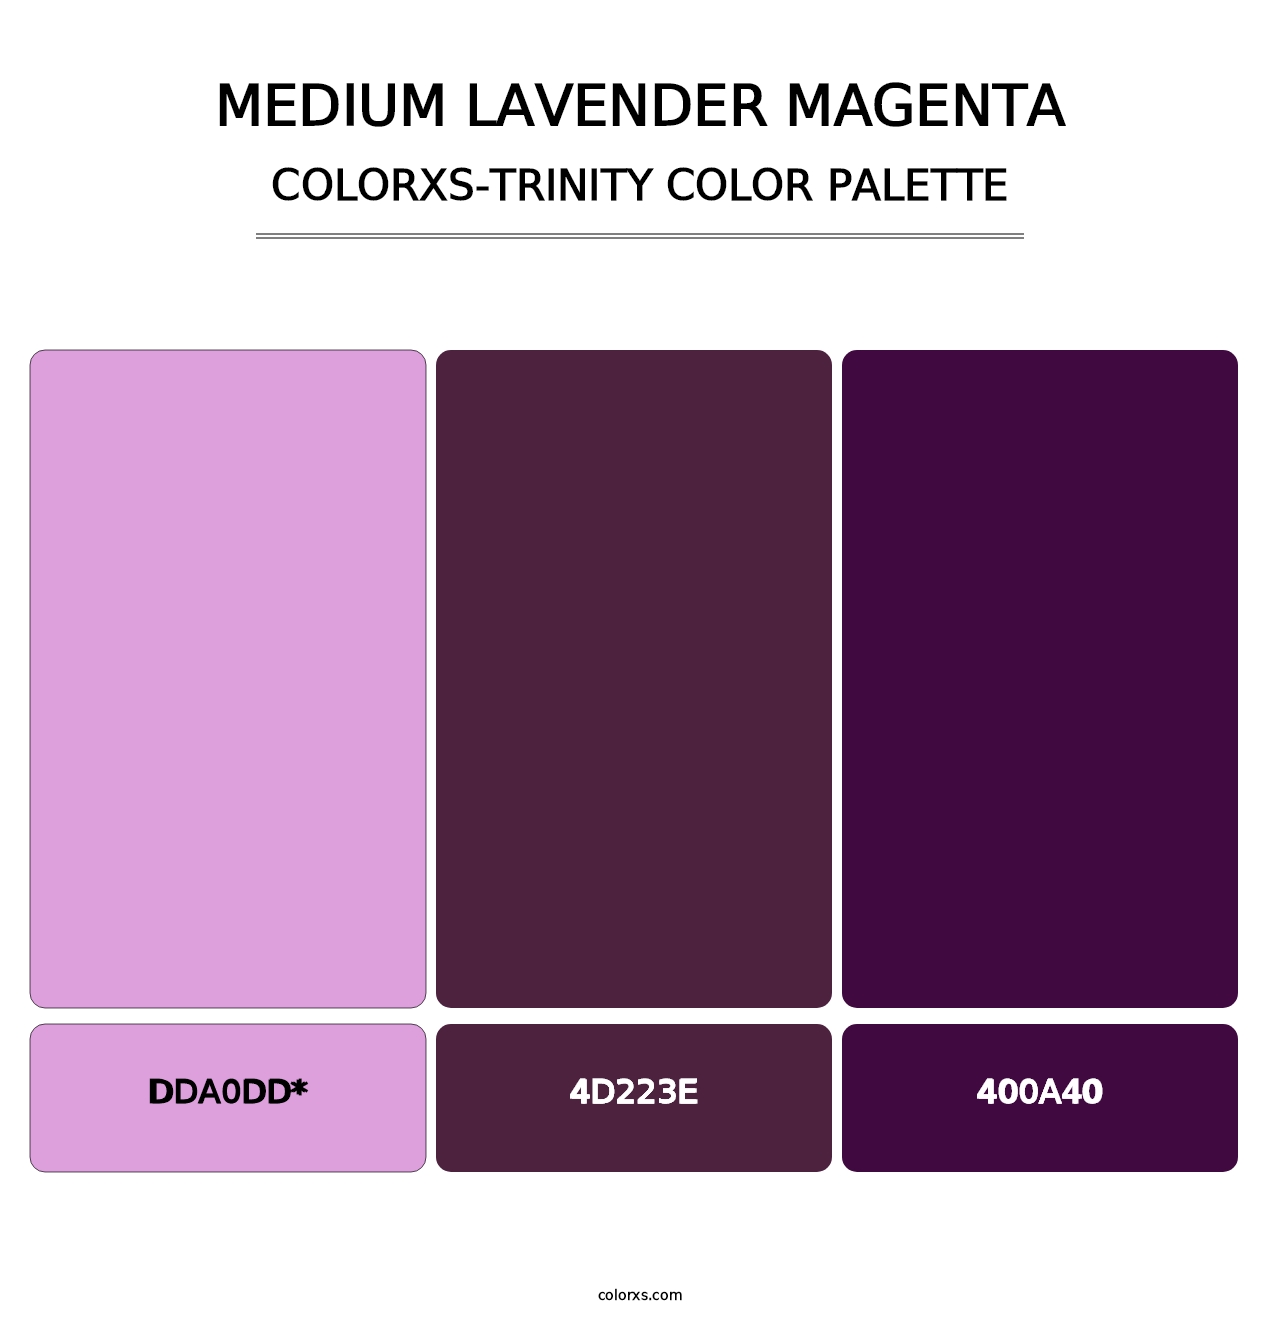 Medium Lavender Magenta - Colorxs Trinity Palette